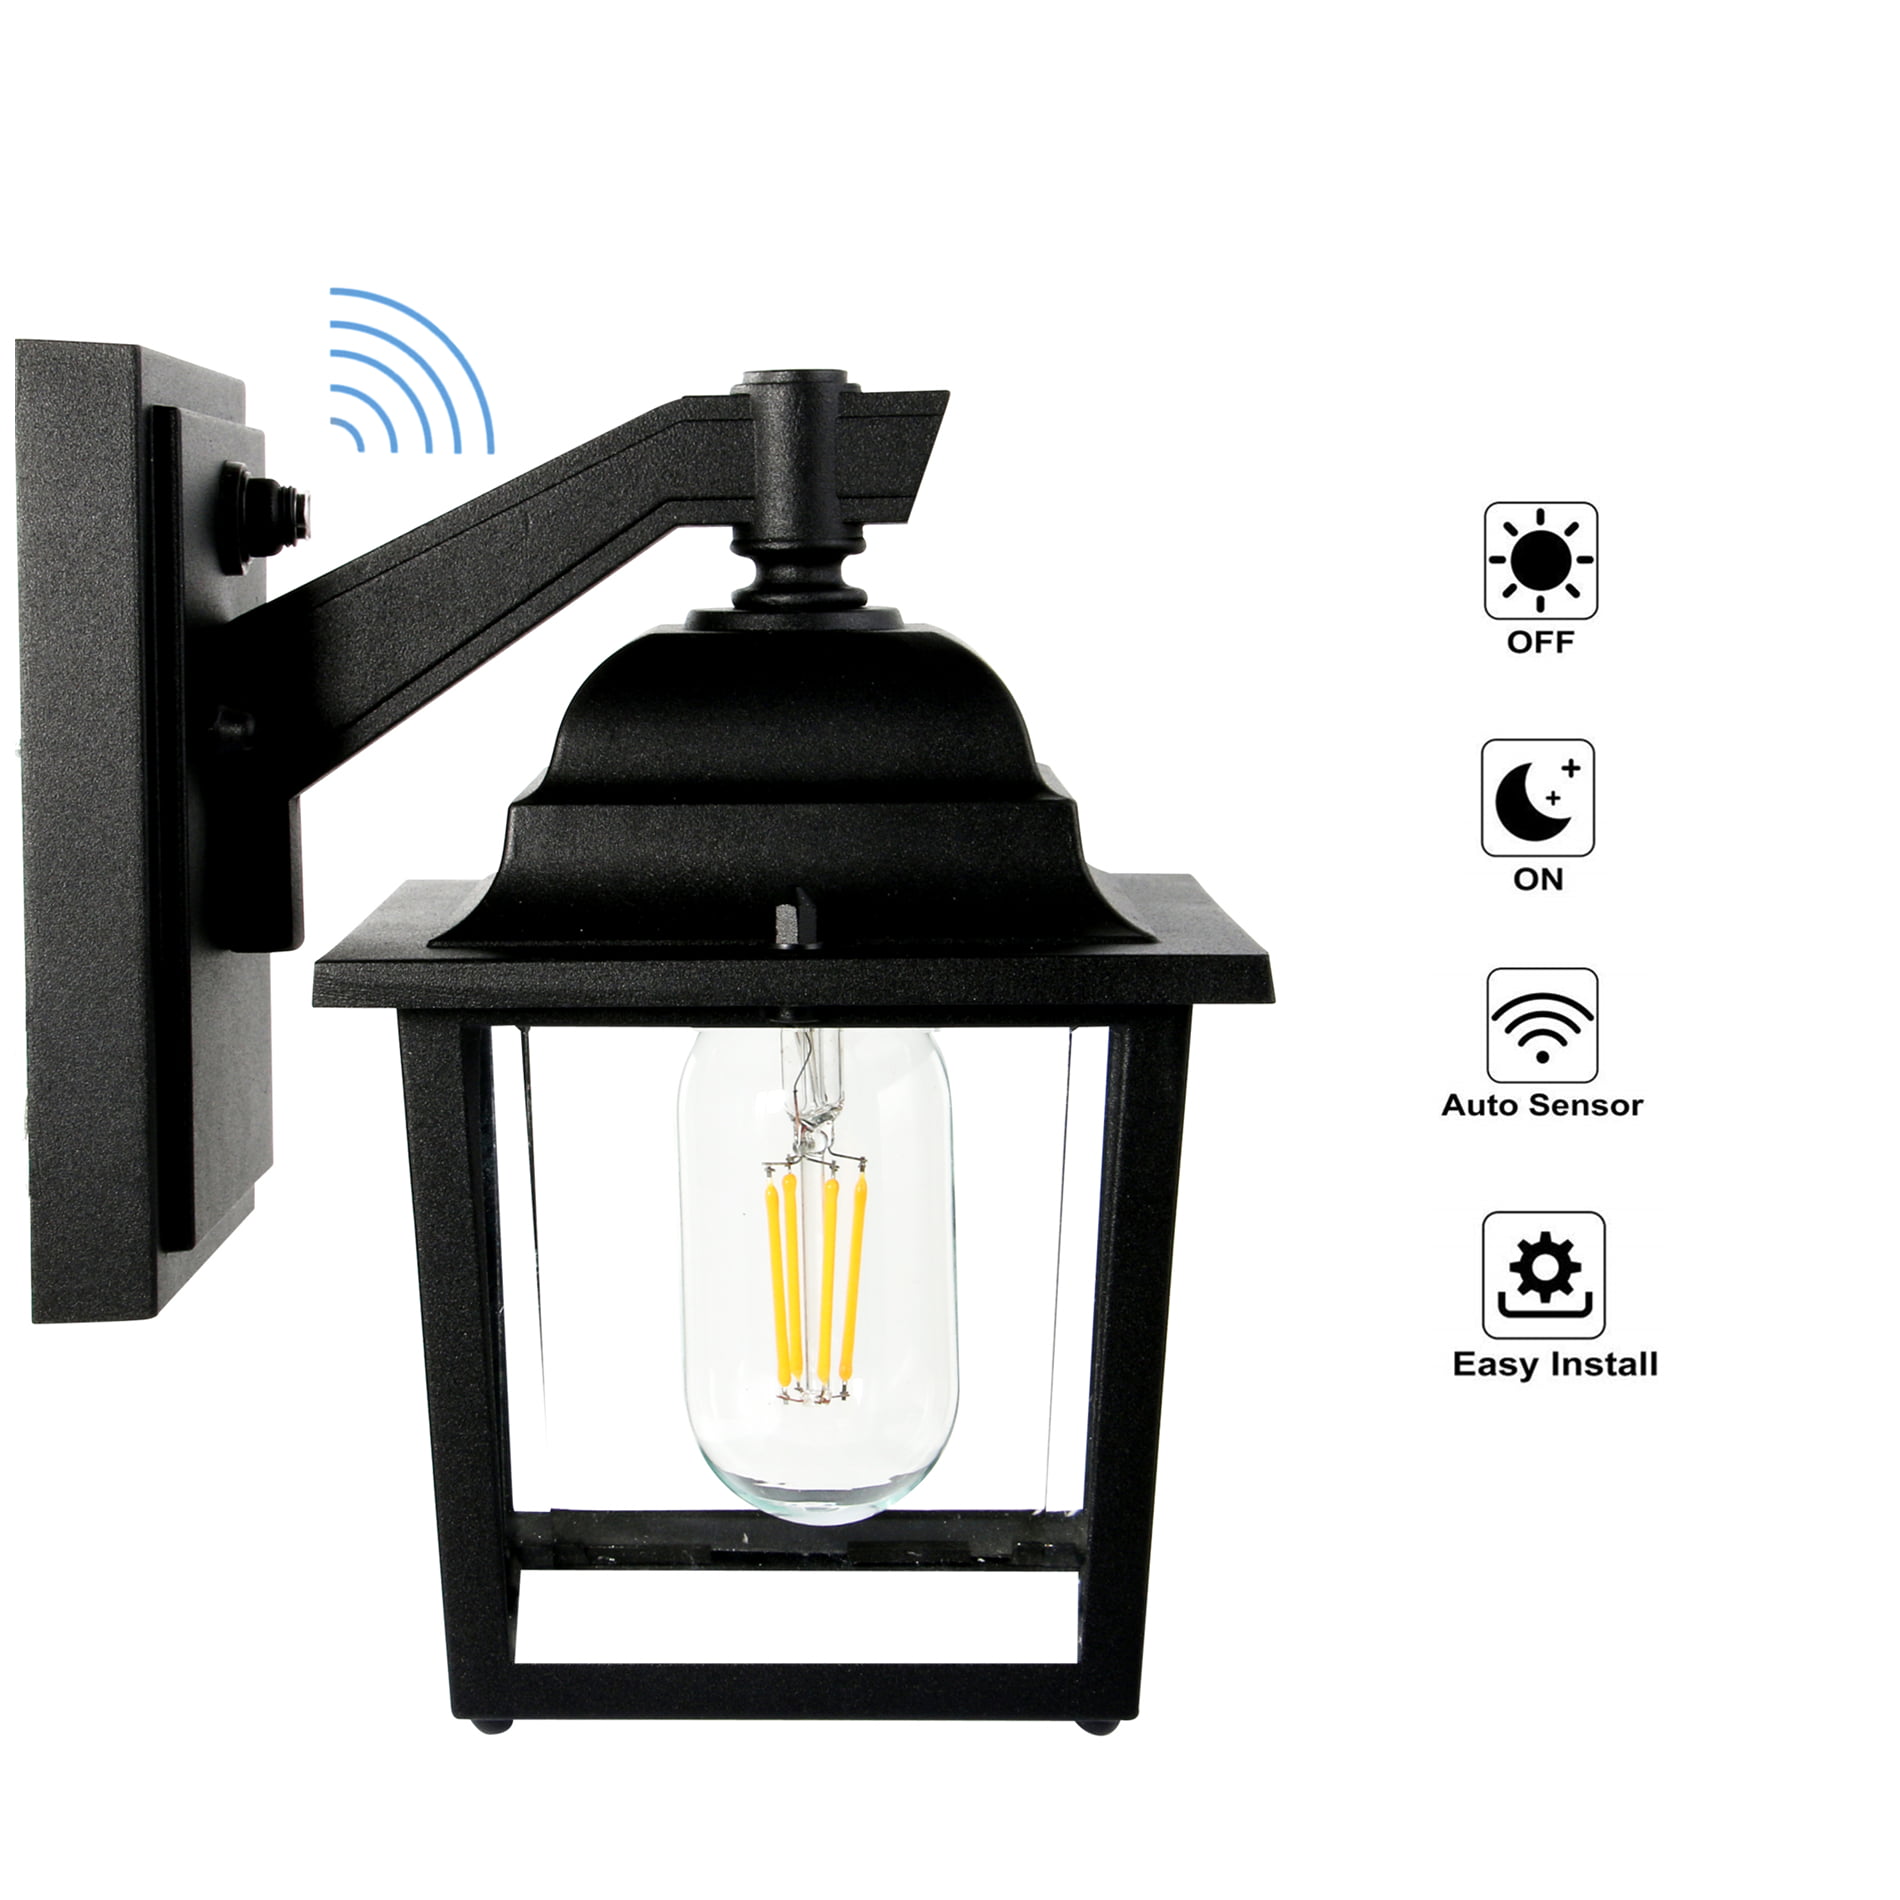 Hll Aob Dask To Dawn Sensor Outdoor, How Do You Install An Outdoor Light Sensor